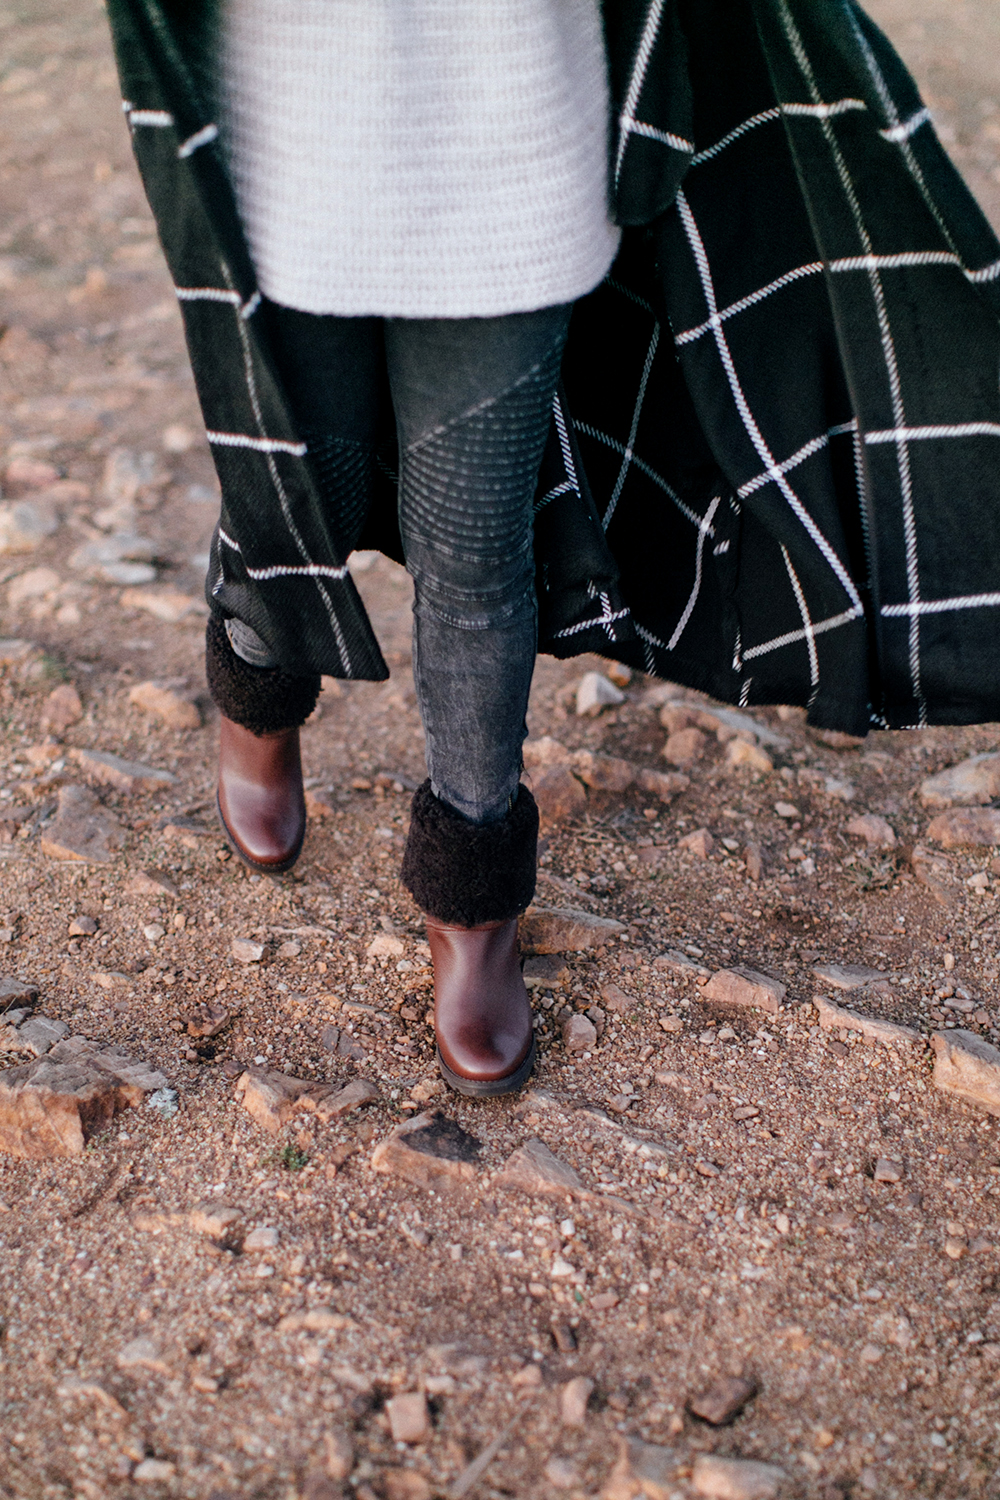 10ugg-boots-fall-sf-sanfrancisco-cityscape-landscape-travel-style-fashion